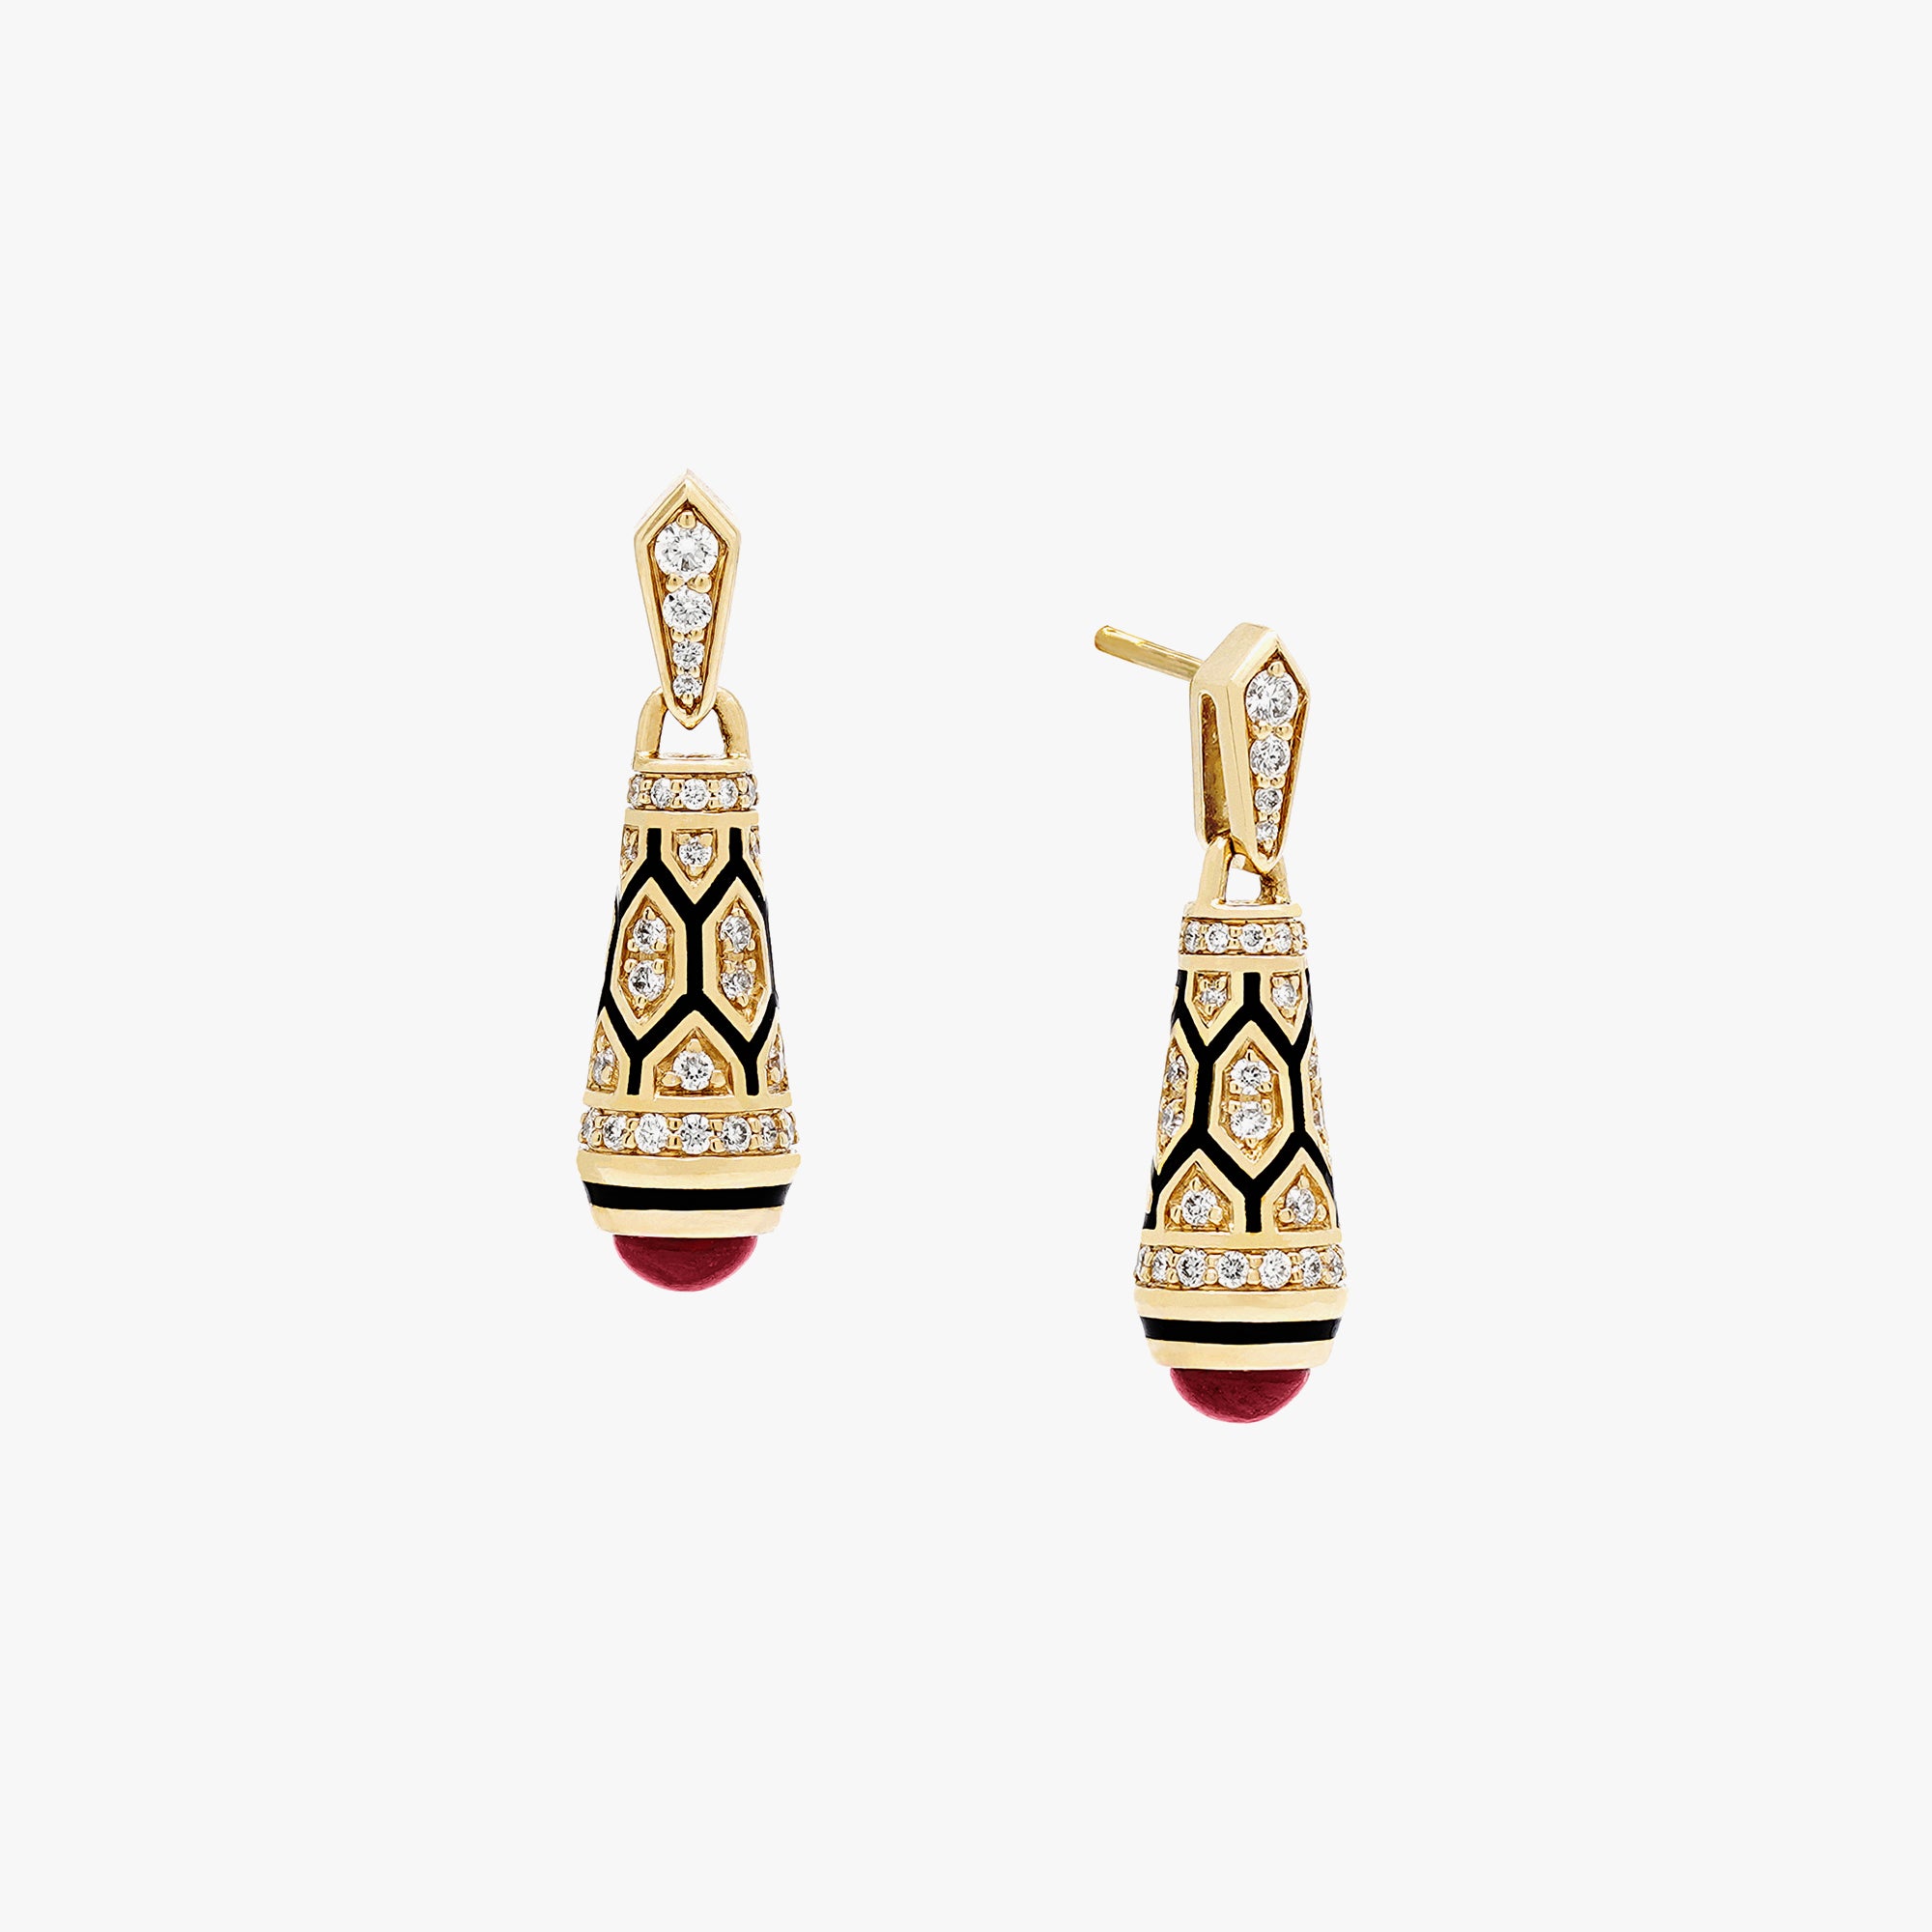 18k Mushabbak earrings in yellow gold with diamonds and rubies